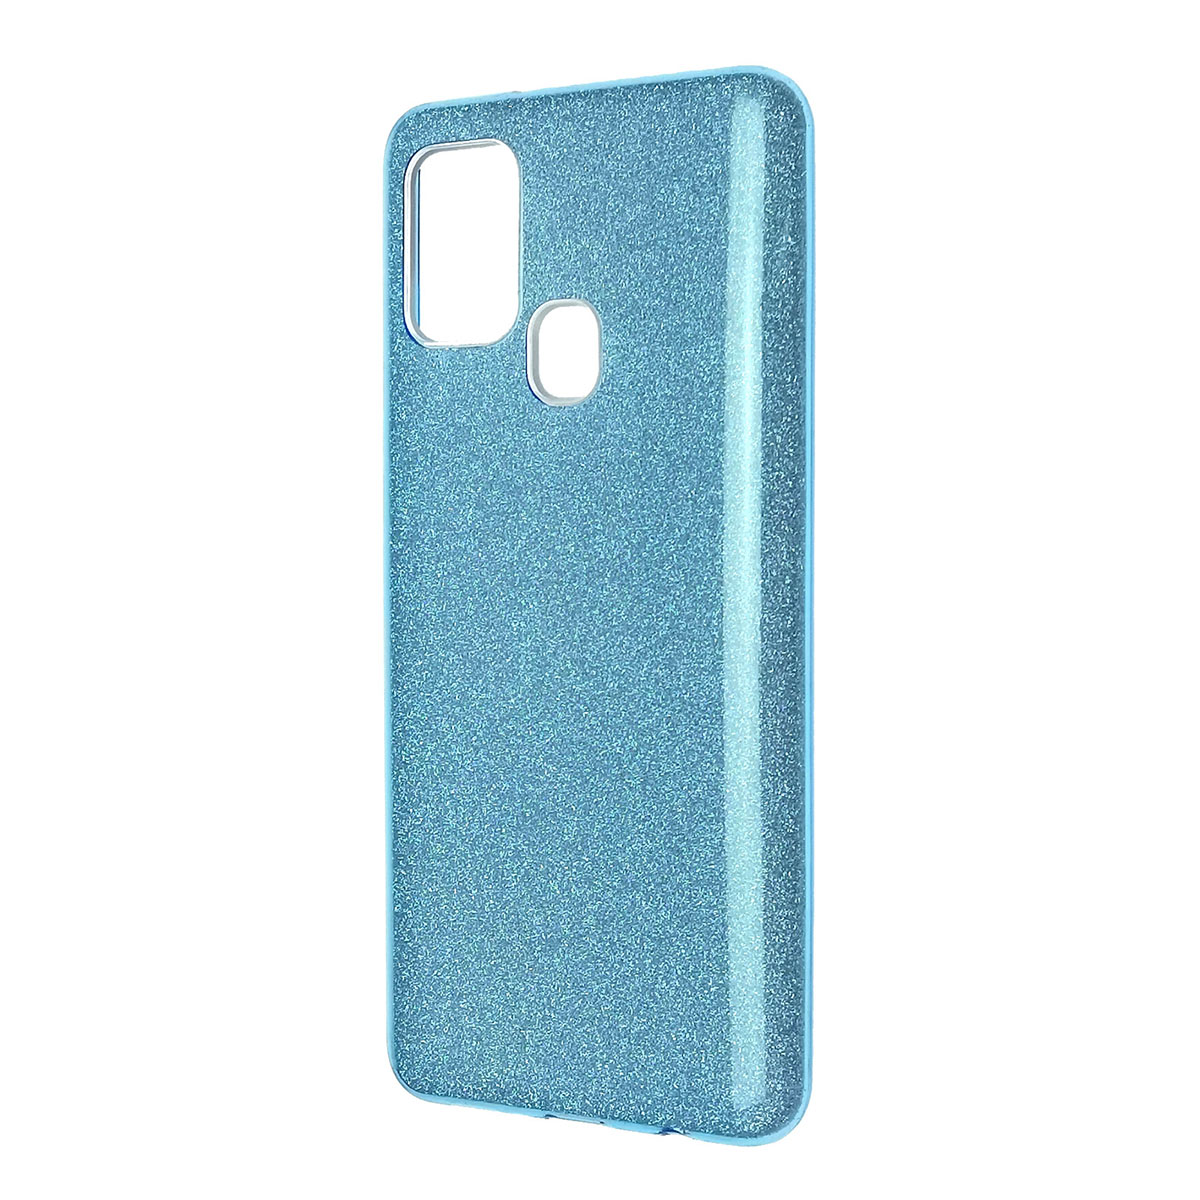 Чехол накладка Shine для SAMSUNG Galaxy A21S (SM-A217), силикон, блестки, цвет голубой.